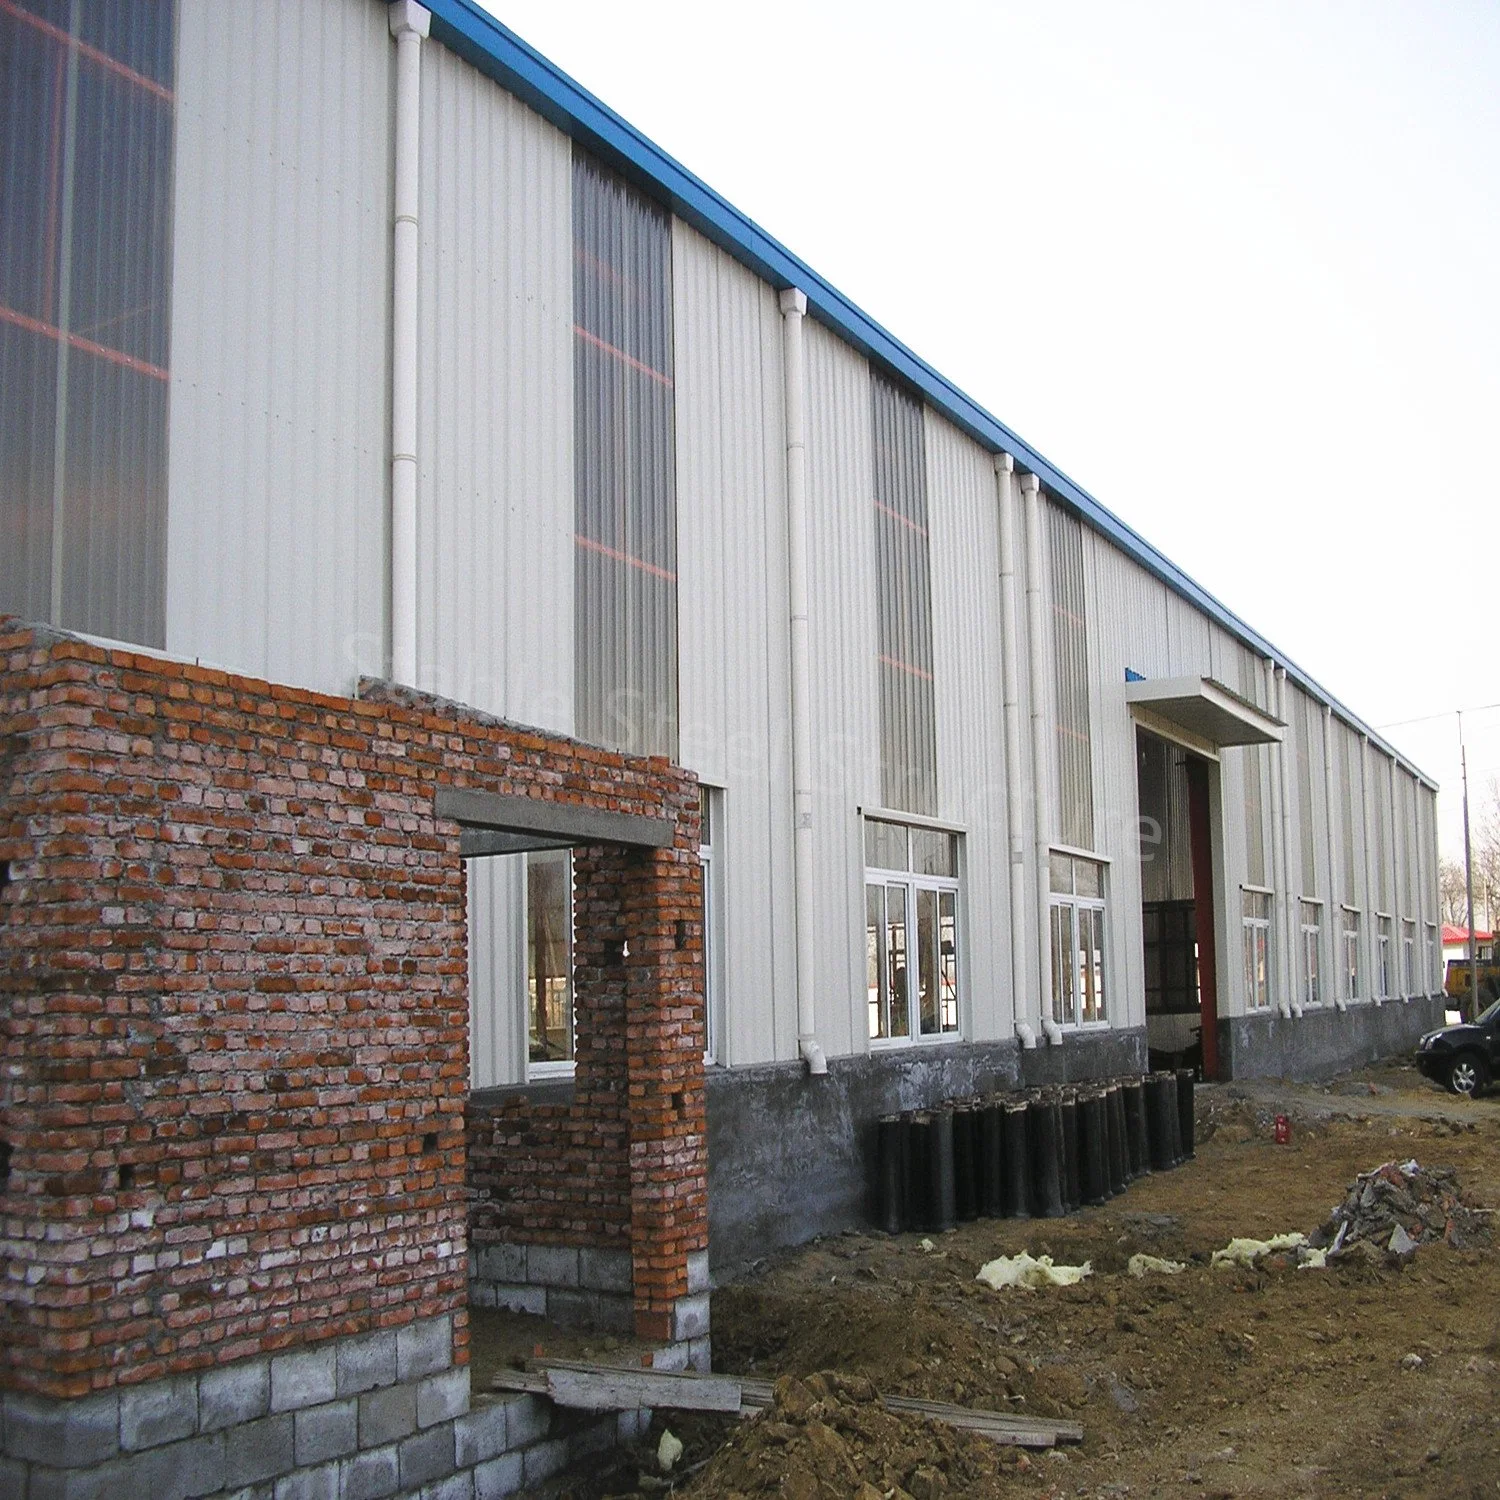 Convenient Installation Prefabrictaed Building Construction Warehouse Hangar Hall Light Steel Frame Building Metal Structure for Workshop